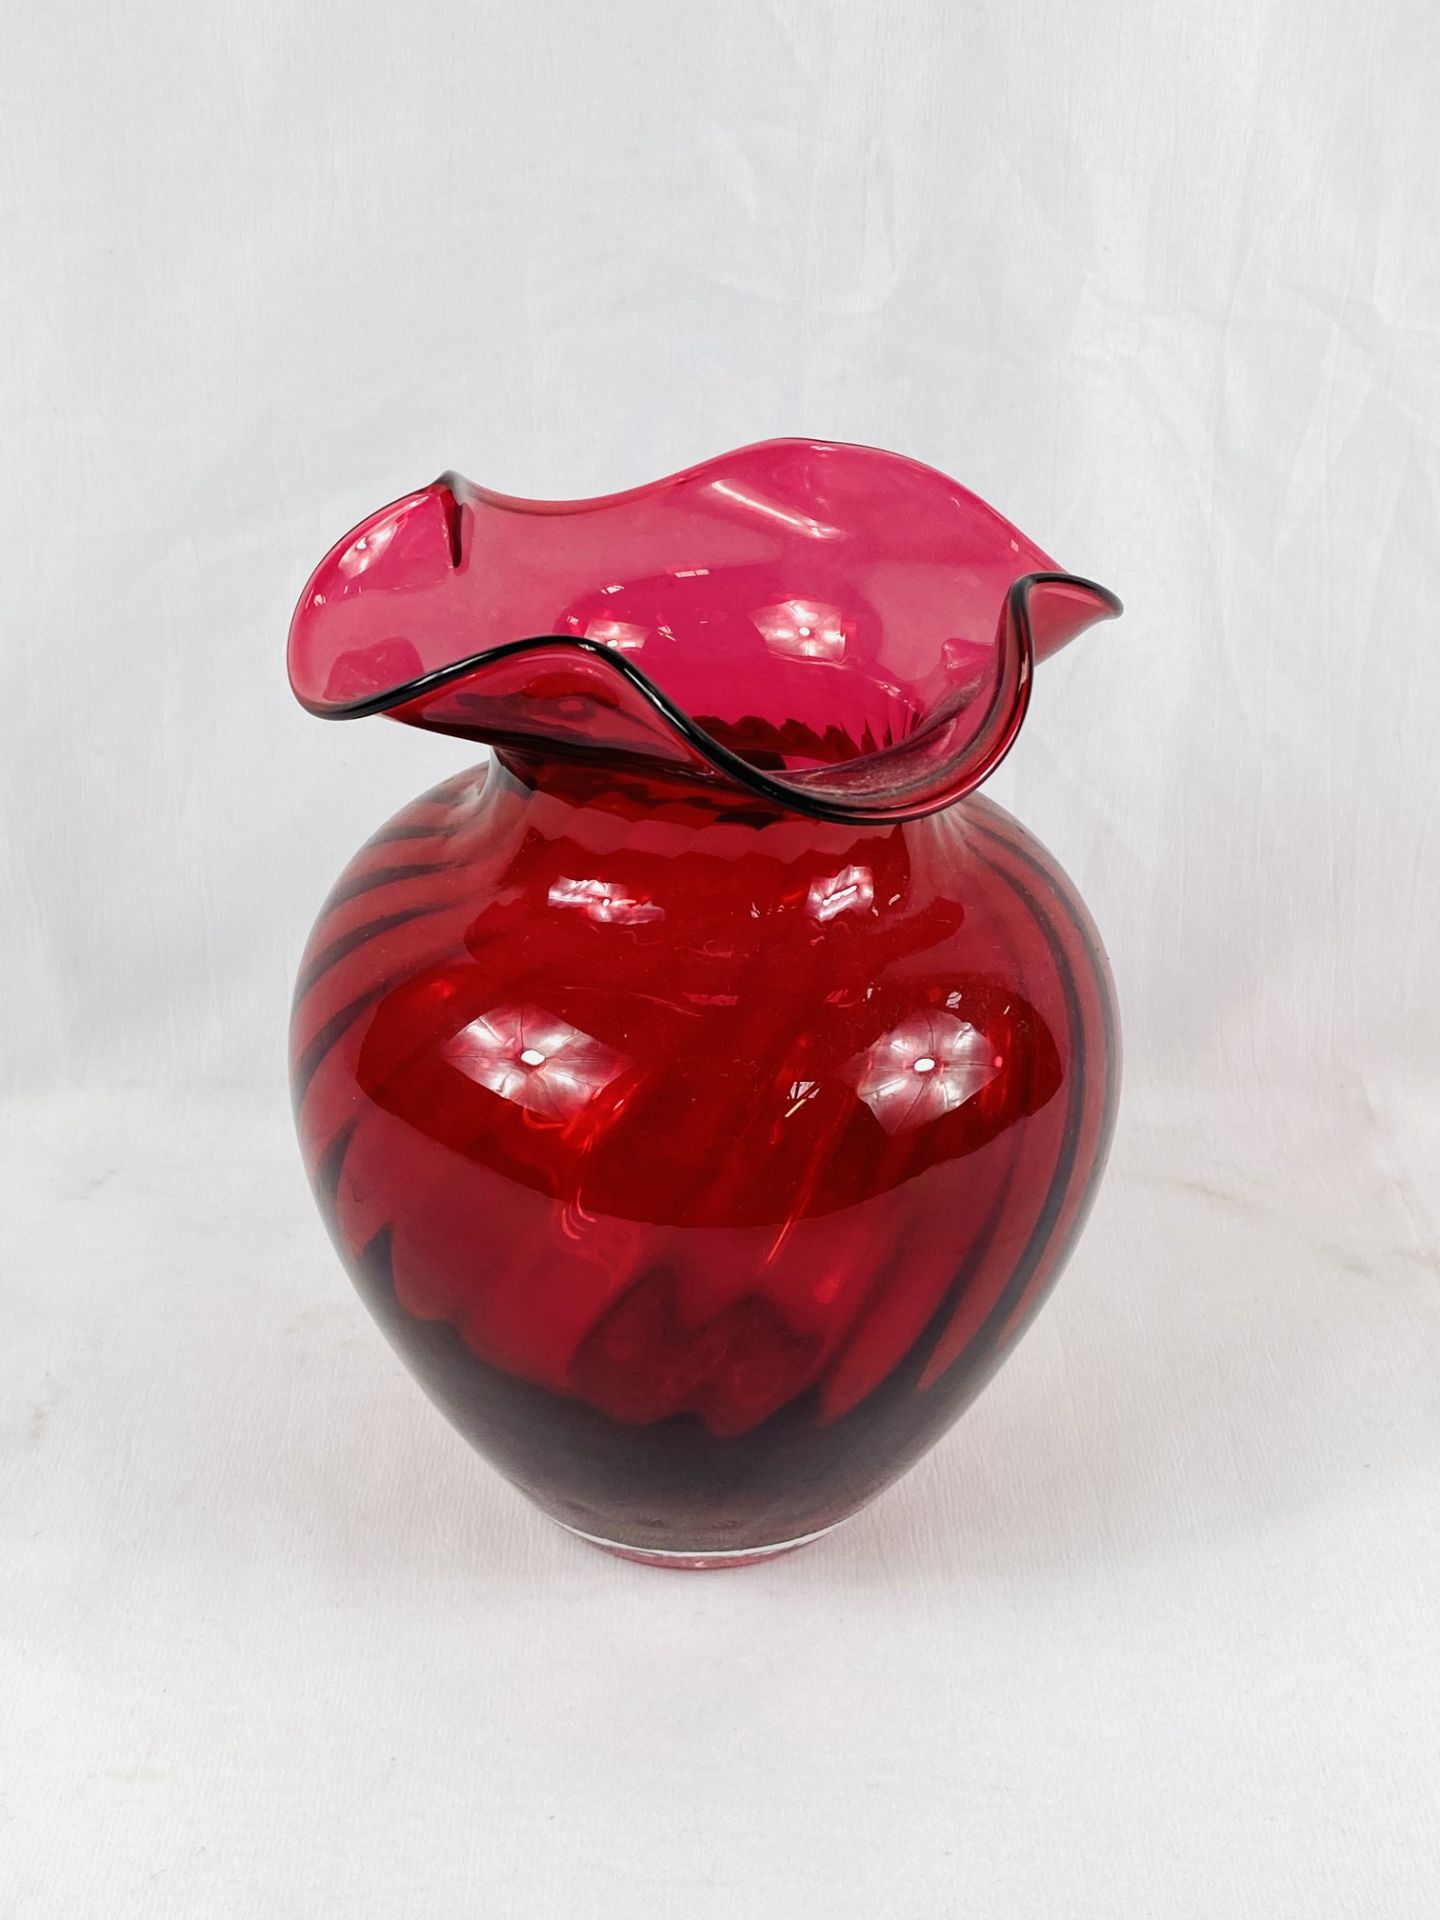 Dartington Crystal vase - Image 3 of 3